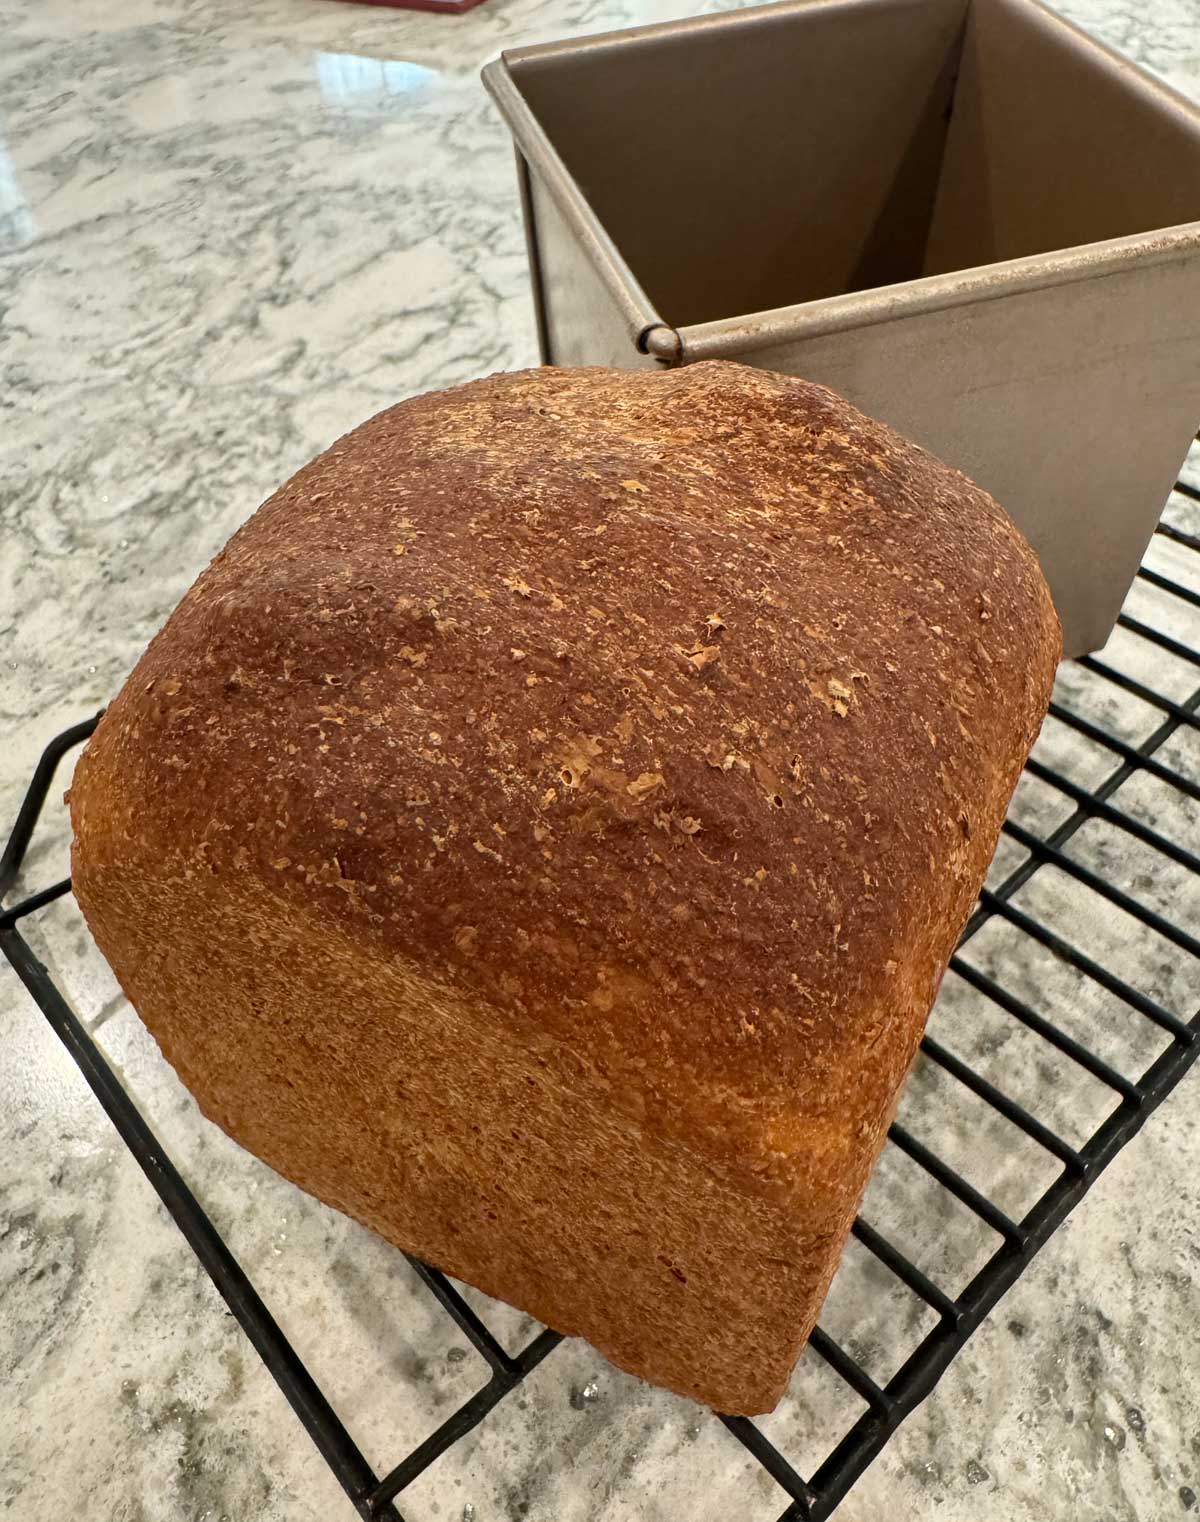 Basic Whole Wheat Bread from a MIni Pullman